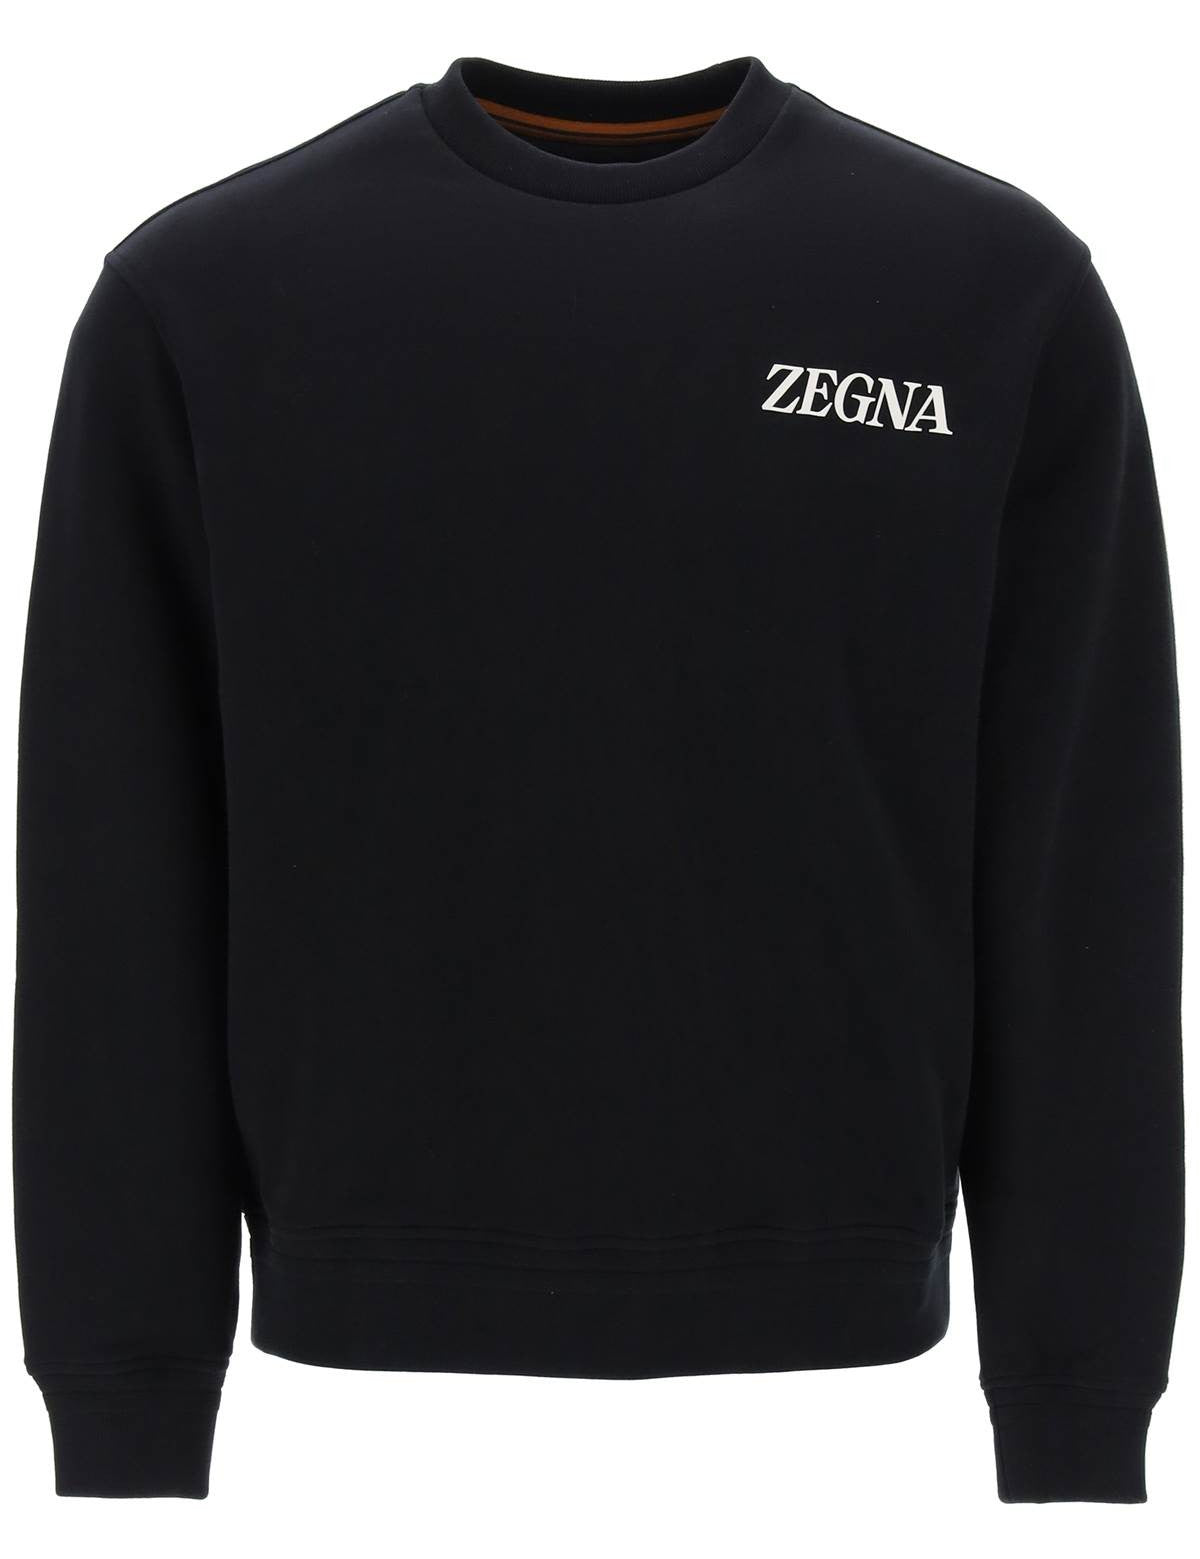 zegna-crewneck-sweatshirt-with-rubberized-logo_aa642528-0ef1-4146-a973-aa81cb773f42.jpg